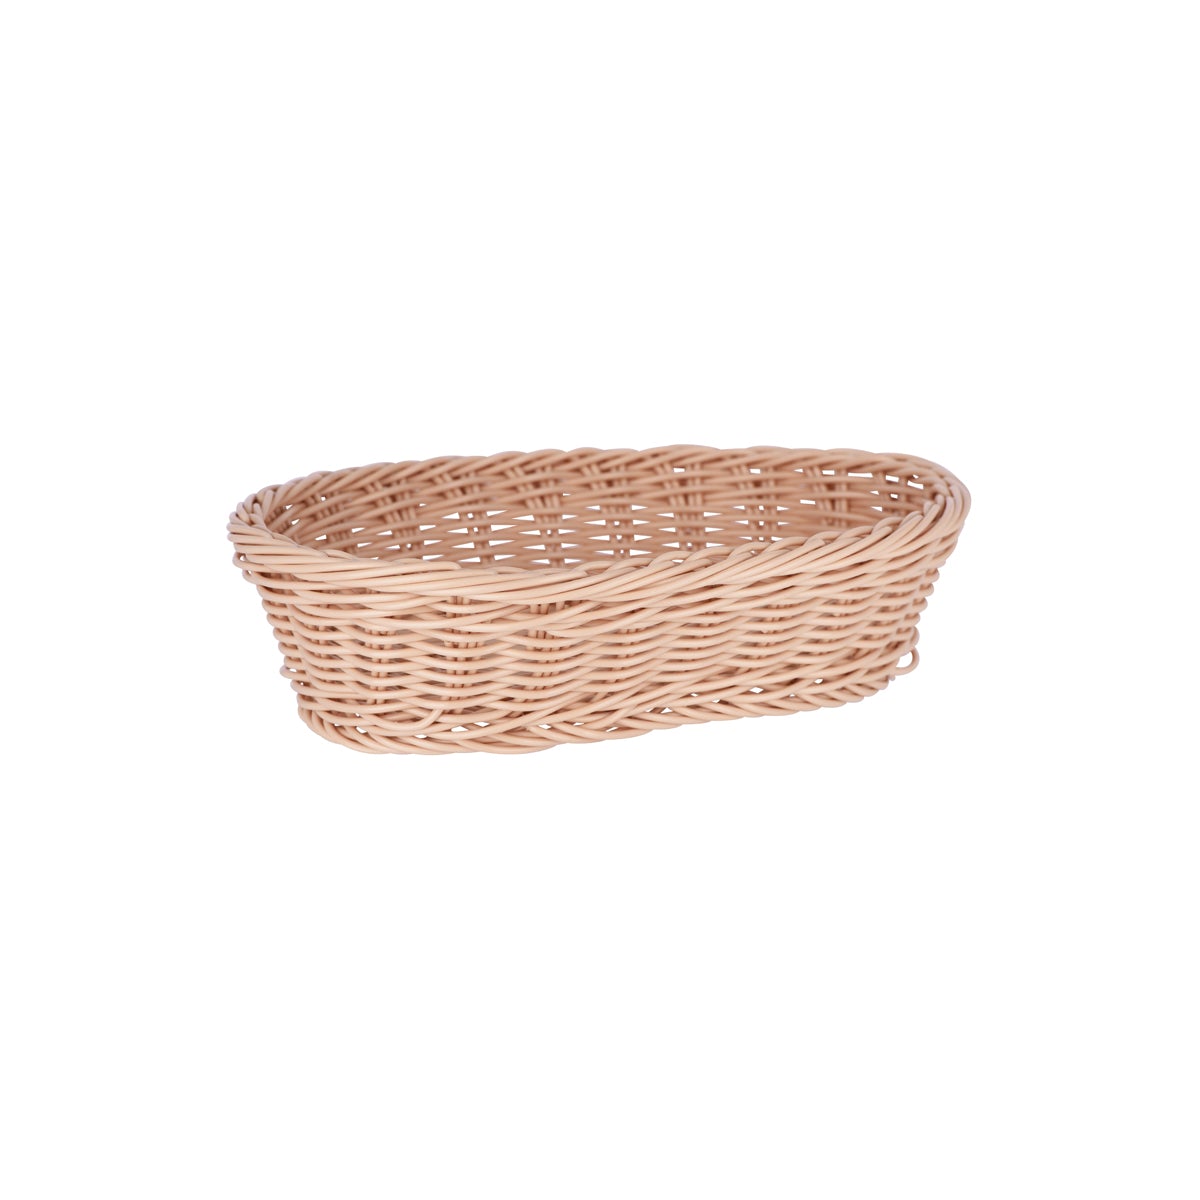 '04063 Chef Inox Bread Basket Oval Polypropylene 265x185x65mm Tomkin Australia Hospitality Supplies